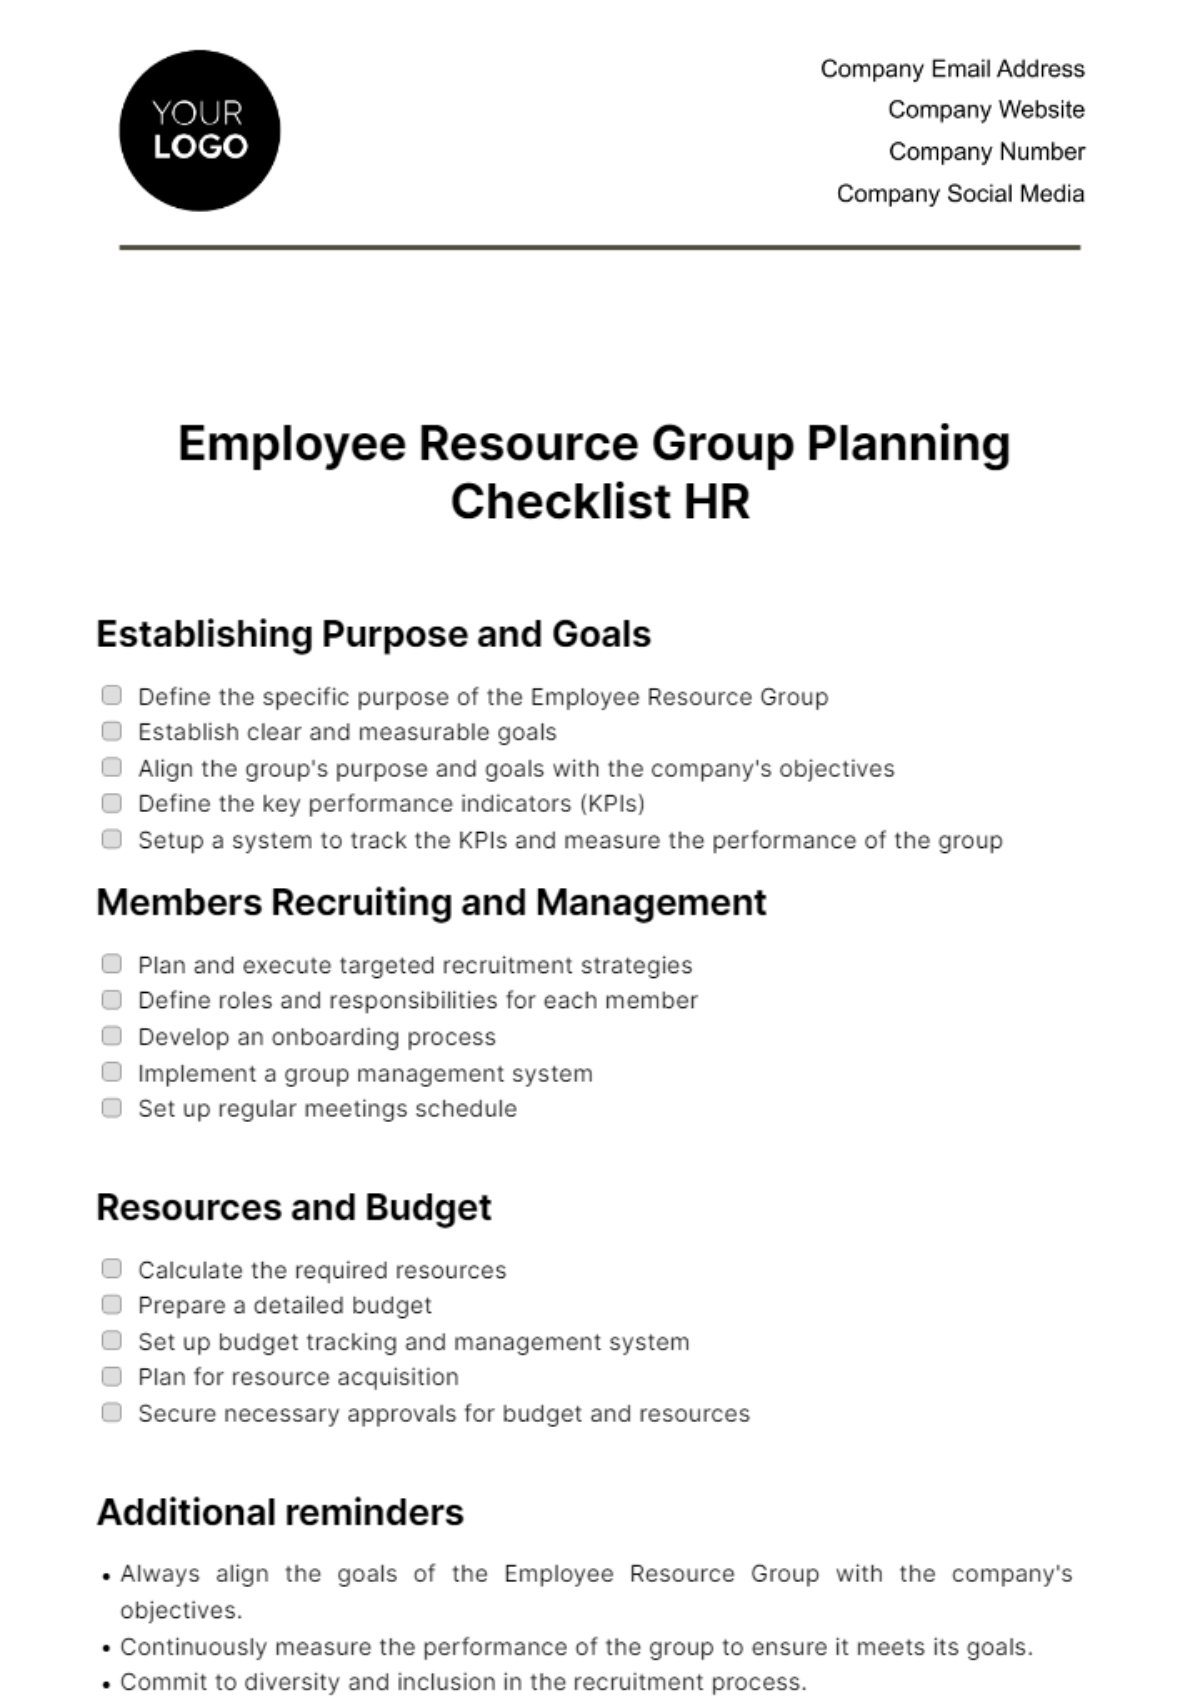 Free Employee Resource Group Planning Checklist HR Template